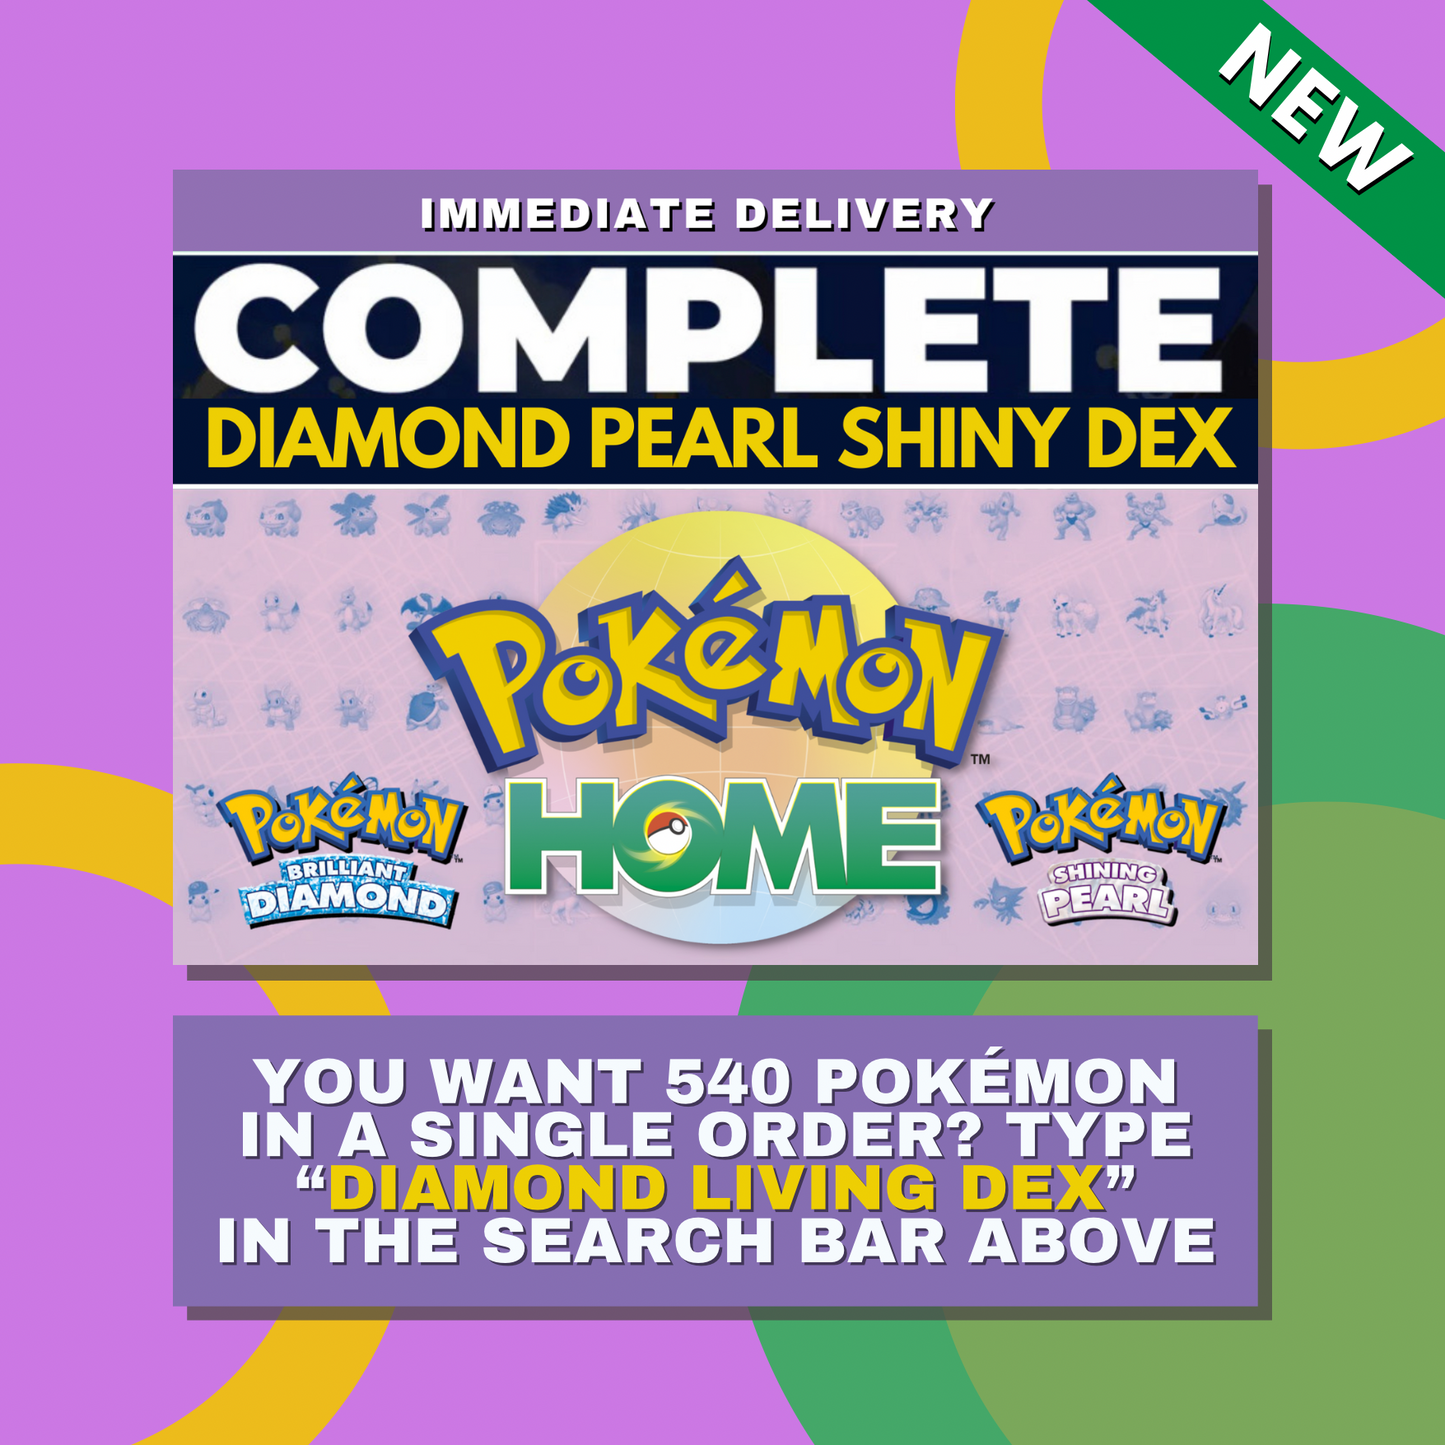 Swampert  Shiny ✨ or Non Shiny Pokémon Brilliant Diamond Shining Pearl Battle Ready 6 IV Competitive 100%  Legit Level 100 Customizable Custom OT